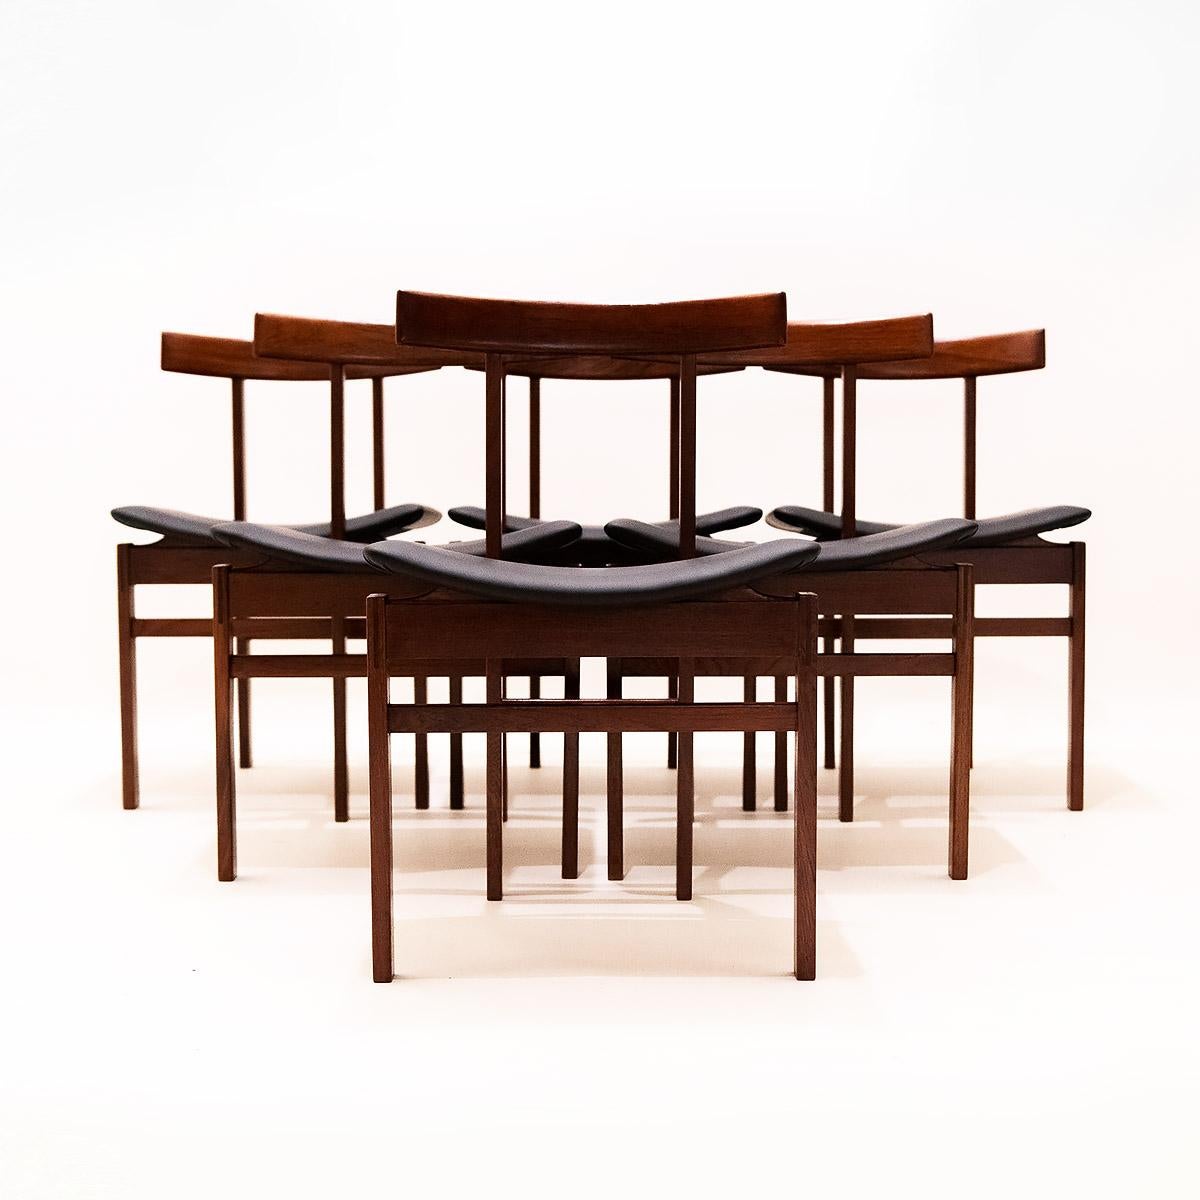 A set of 6 Model FD193 Danish Mid-Century Modern teak and black leather dining chairs designed by Inger Klingenberg for France & Søn. 

Danish designer Inger Klingenberg (1932-1997) produced some of the most compelling furniture designs of the